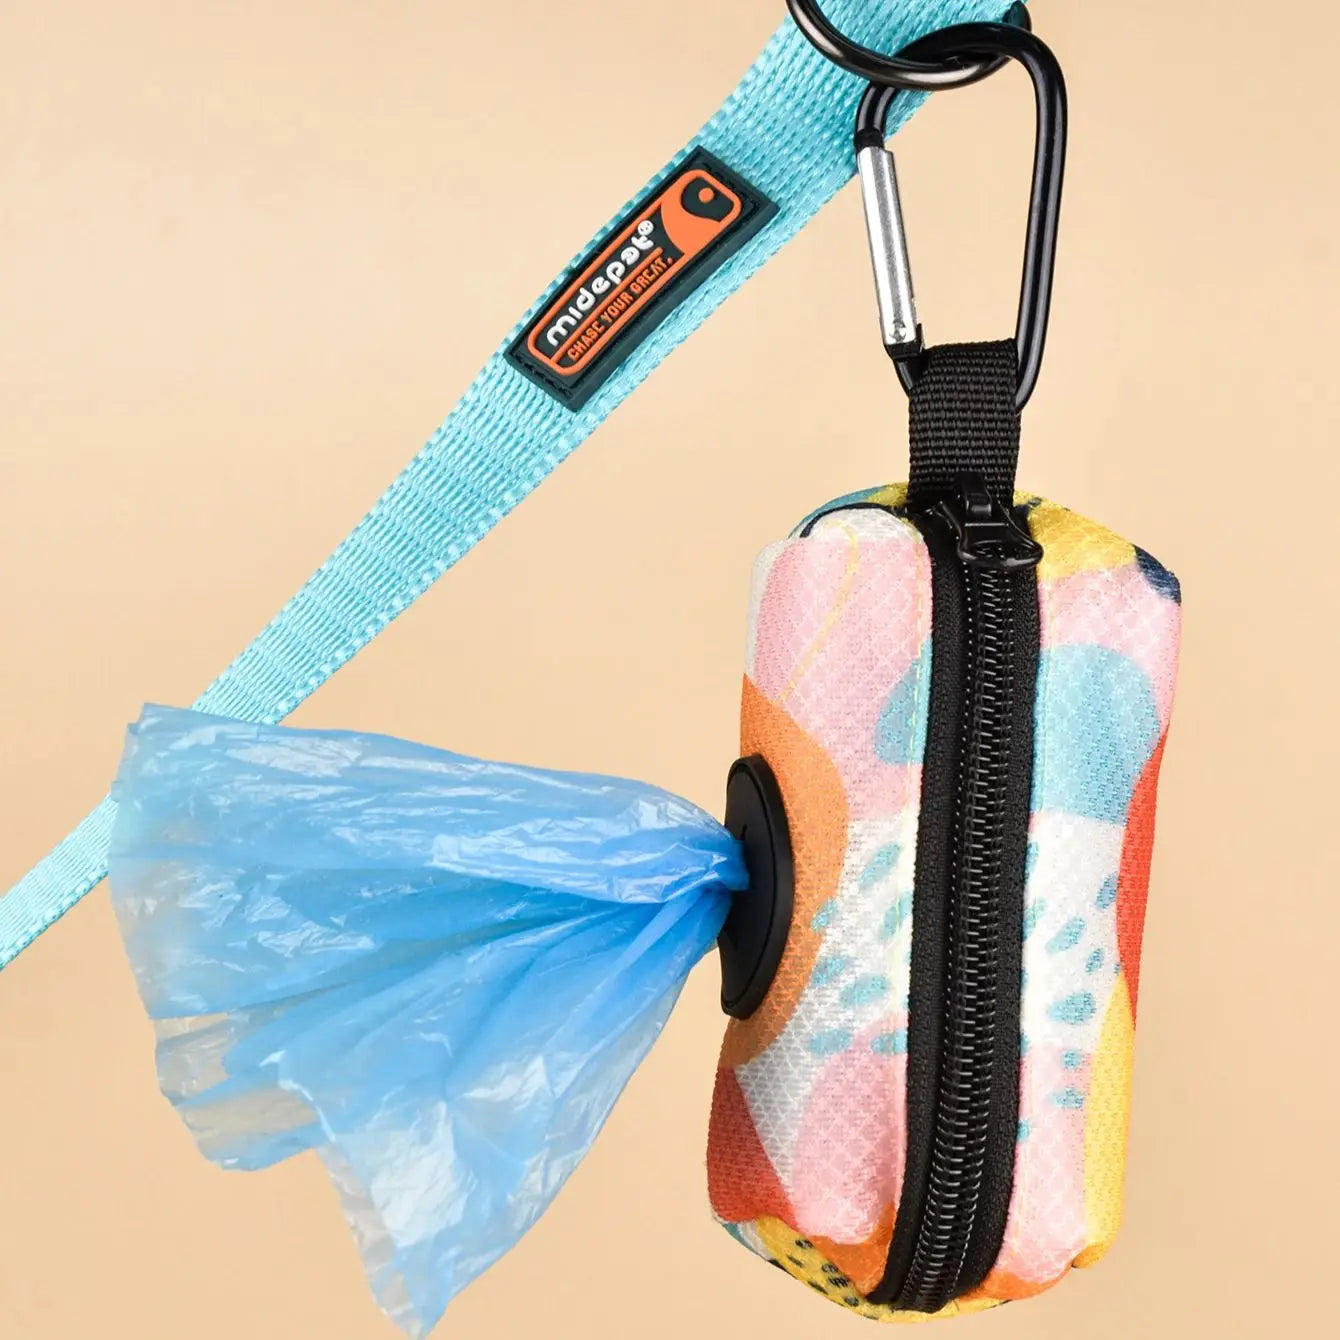 Abstract Designer Print Pet Poop Bag Dispenser: Stylish Holder & Leash Attachment  petlums.com   